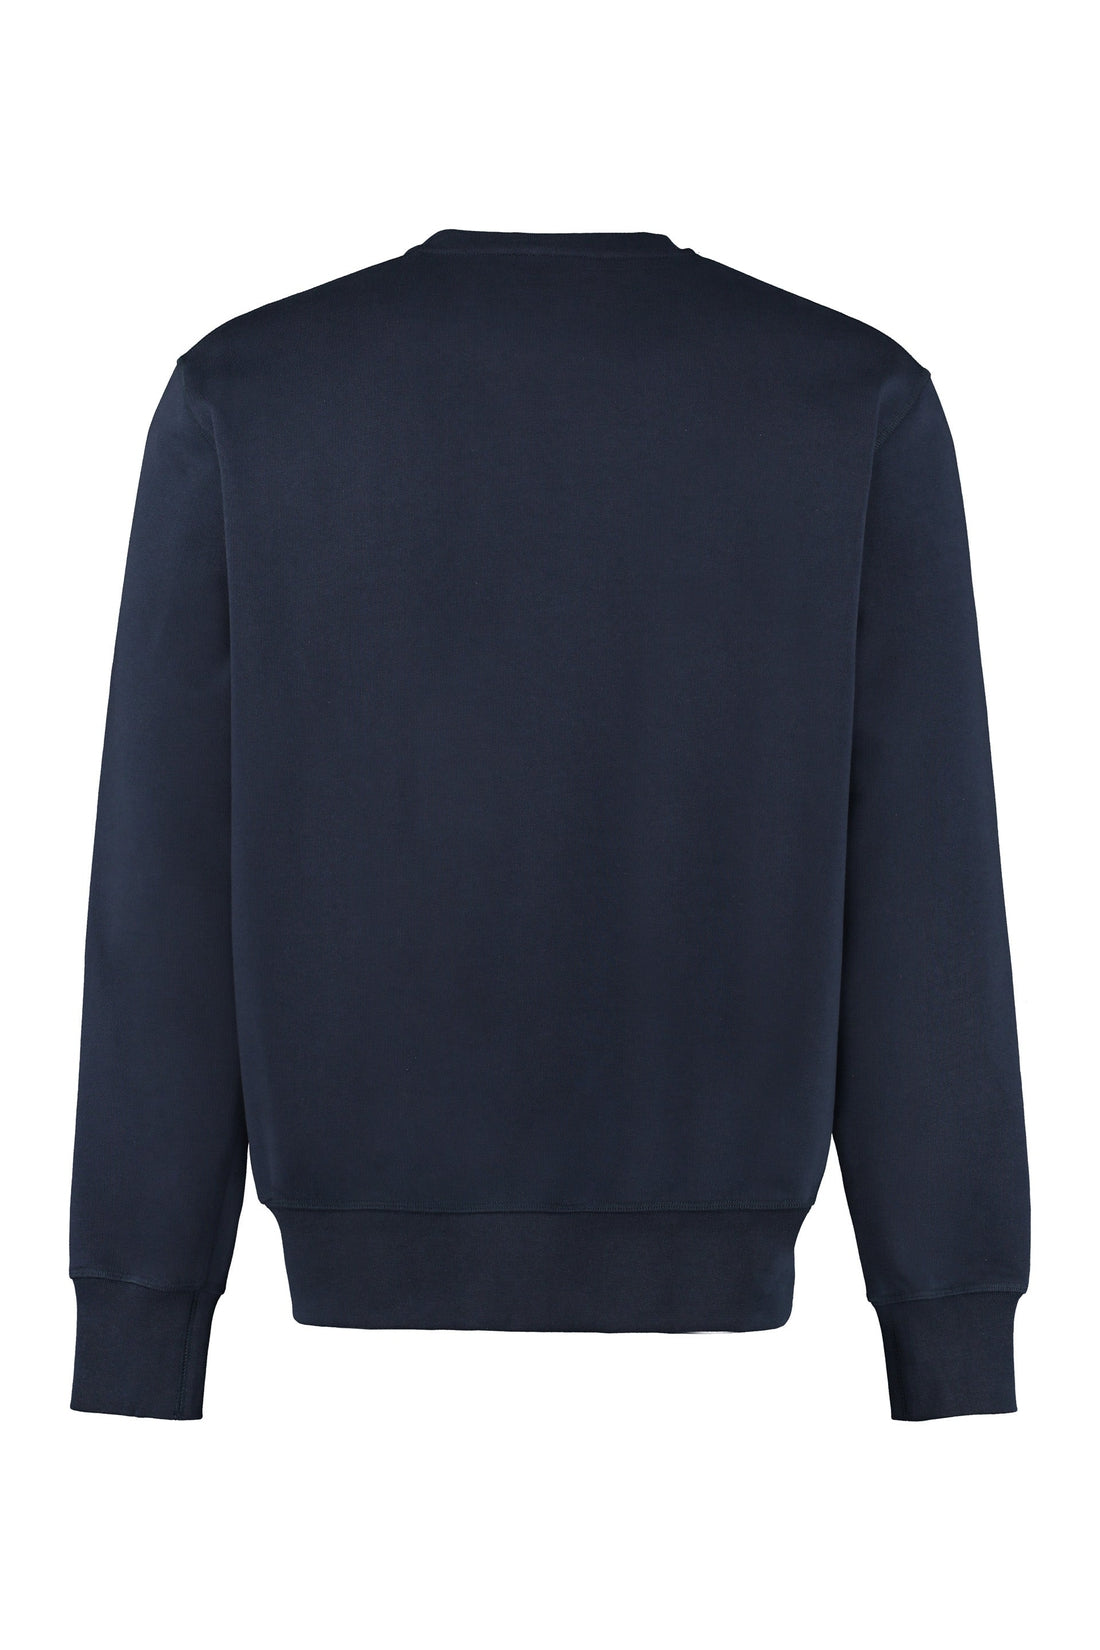 Alexander McQueen-OUTLET-SALE-Logo detail cotton sweatshirt-ARCHIVIST